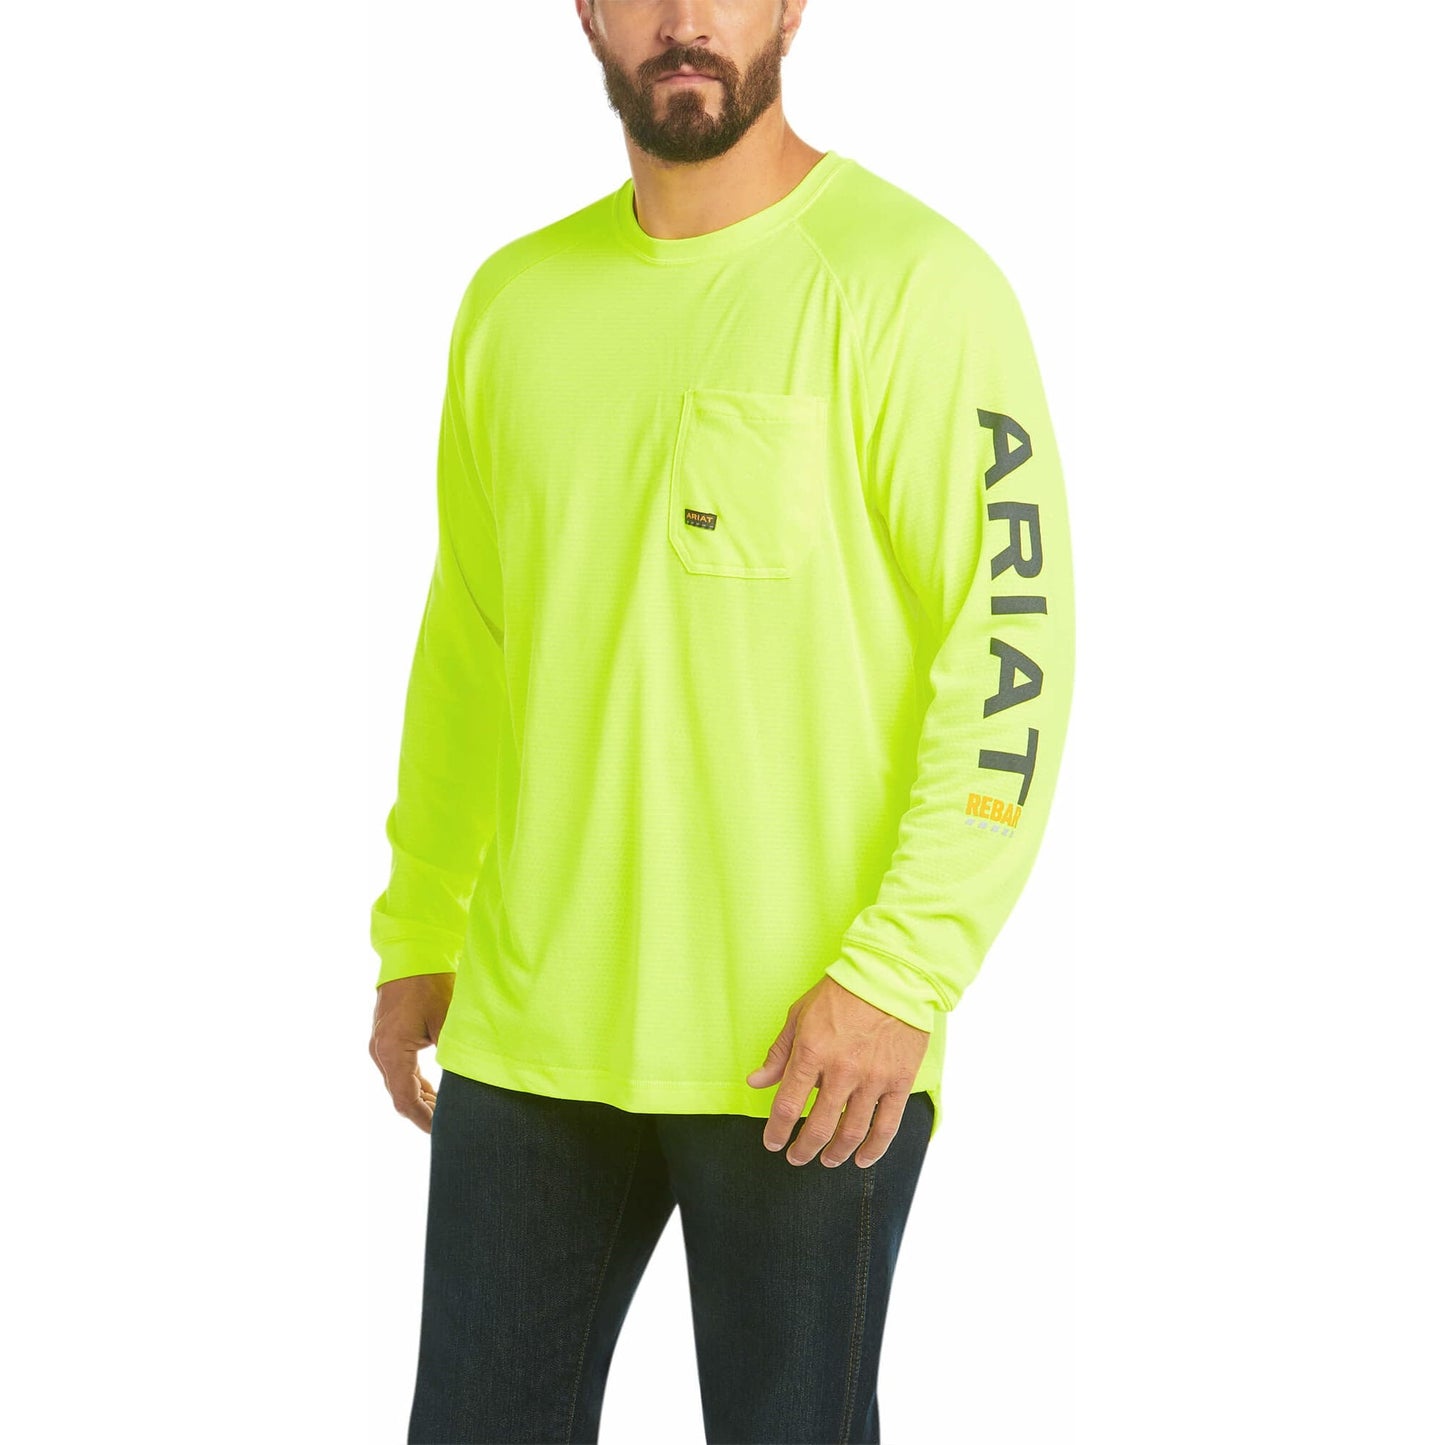 Ariat® Men's Rebar Heat Fighter Long Sleeves Neon Lime Tee 10031031